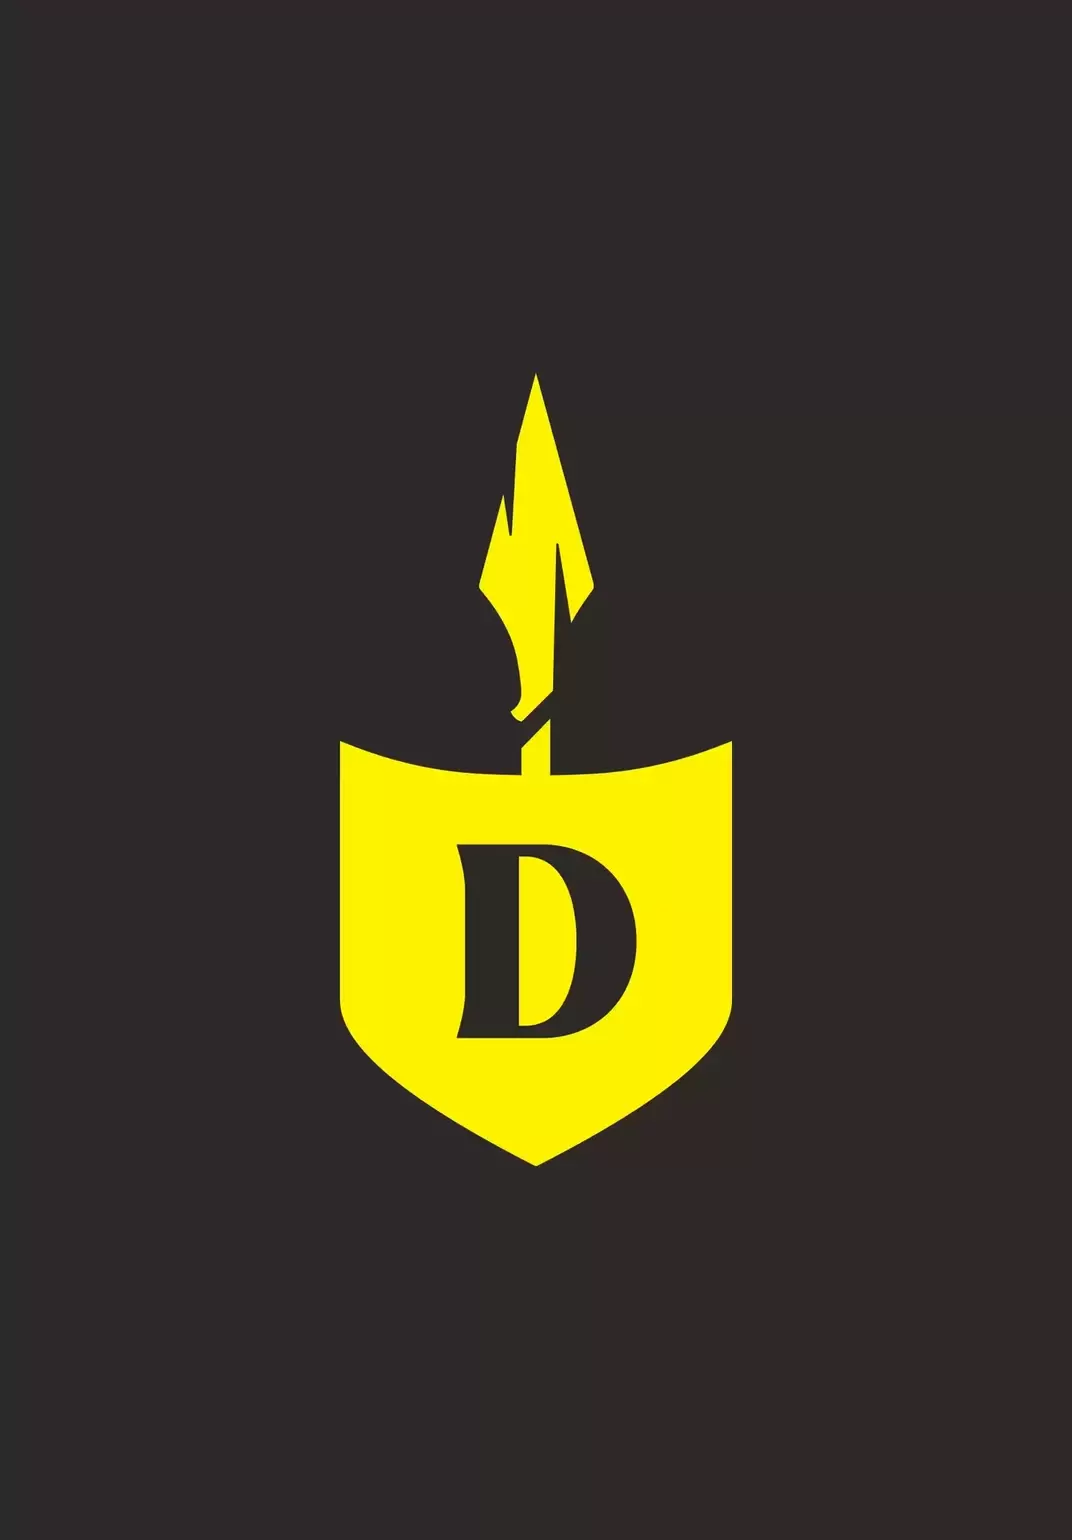 7 Duel branding symbole